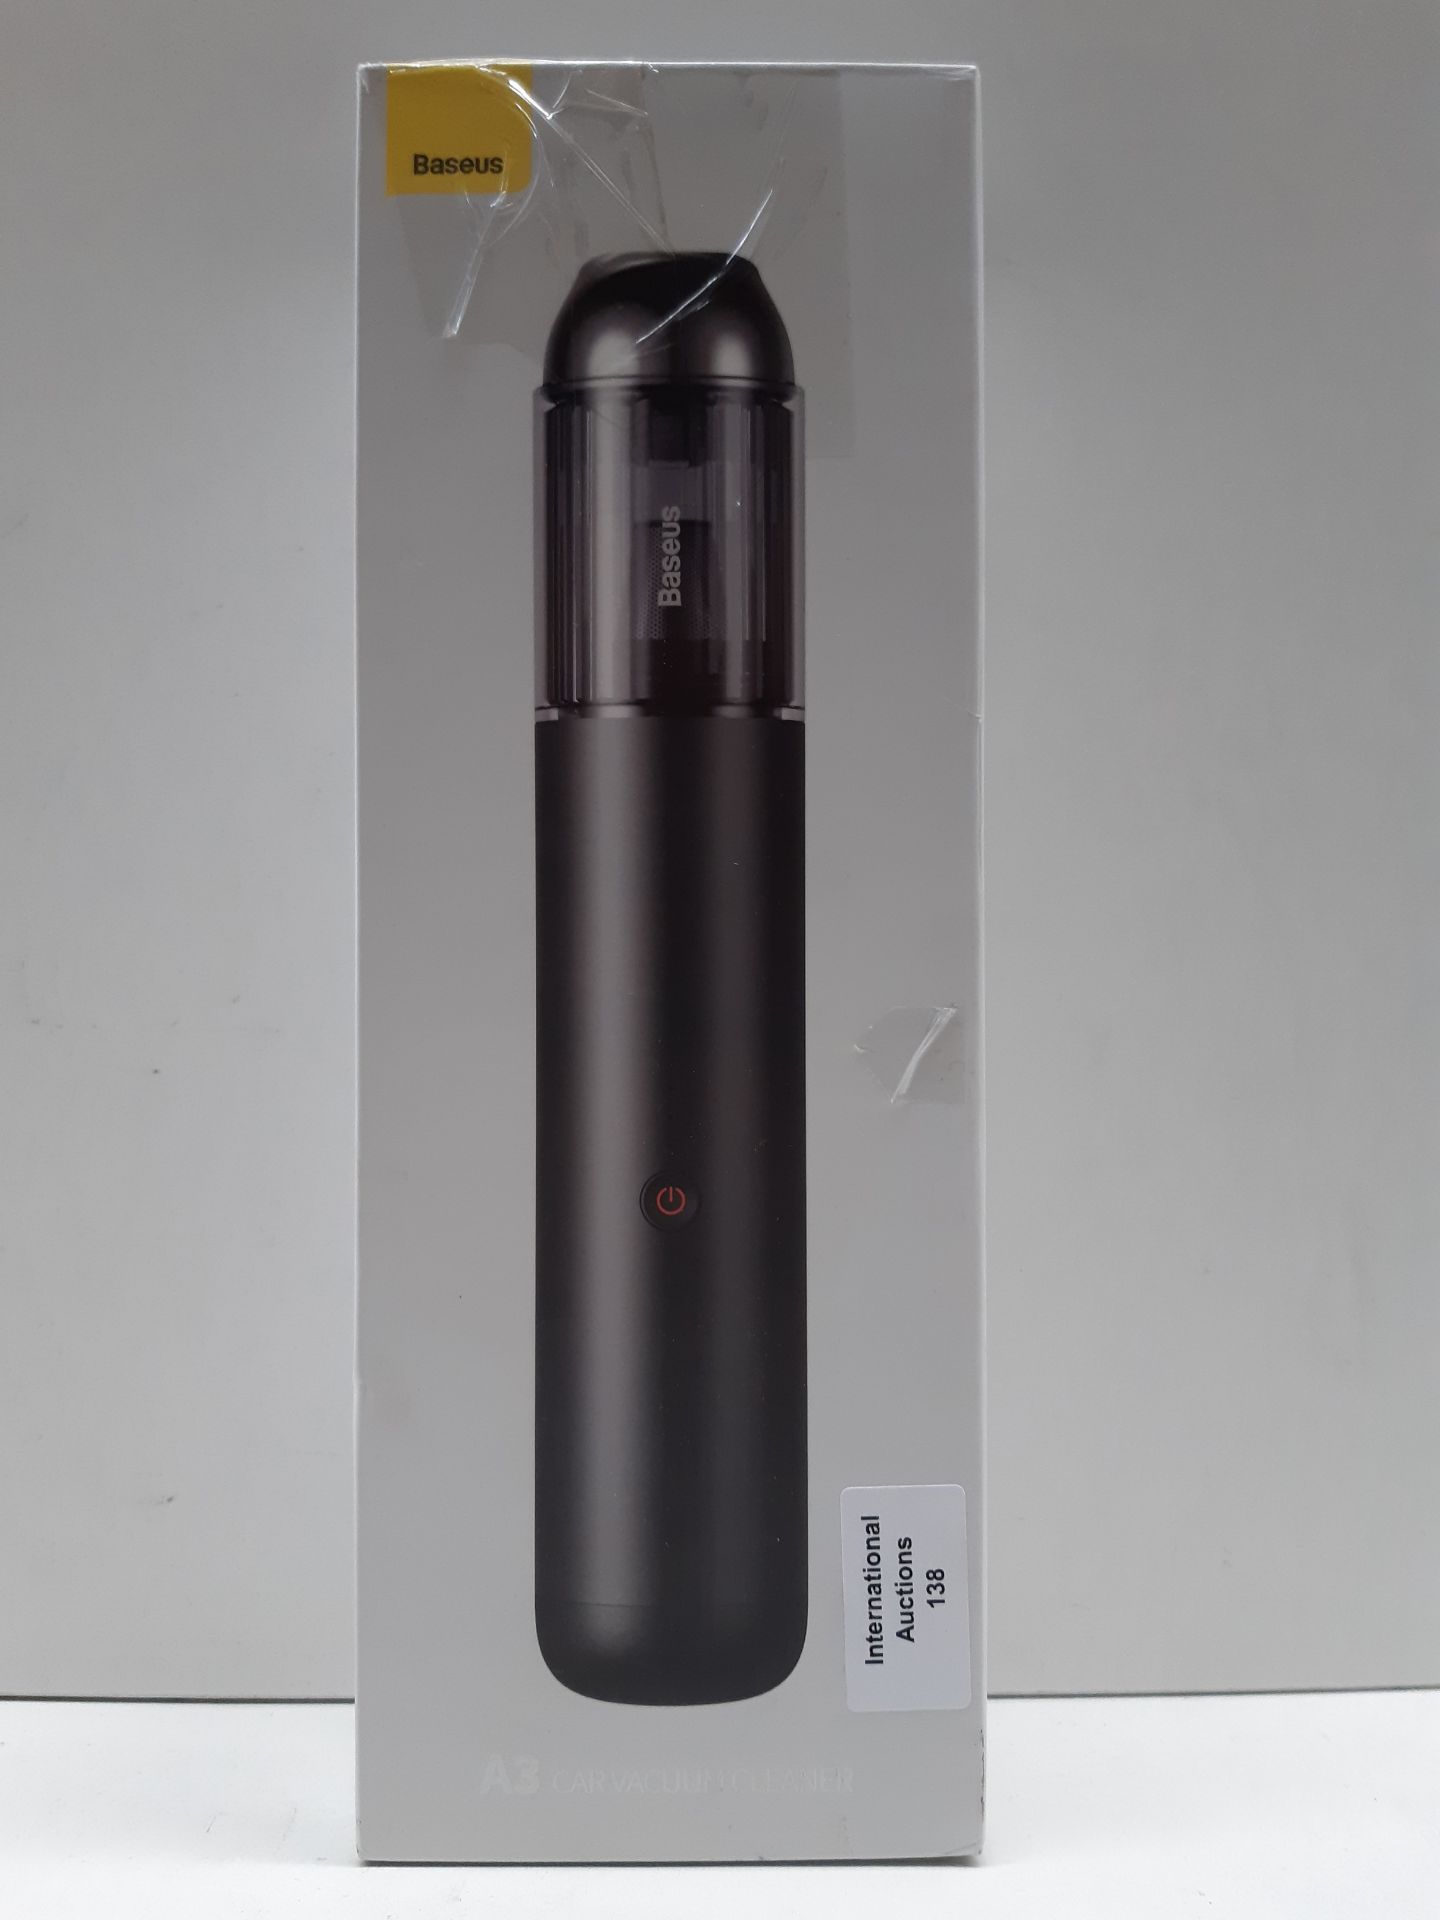 RRP £89.99 Baseus Handheld Vacuum - Image 2 of 2